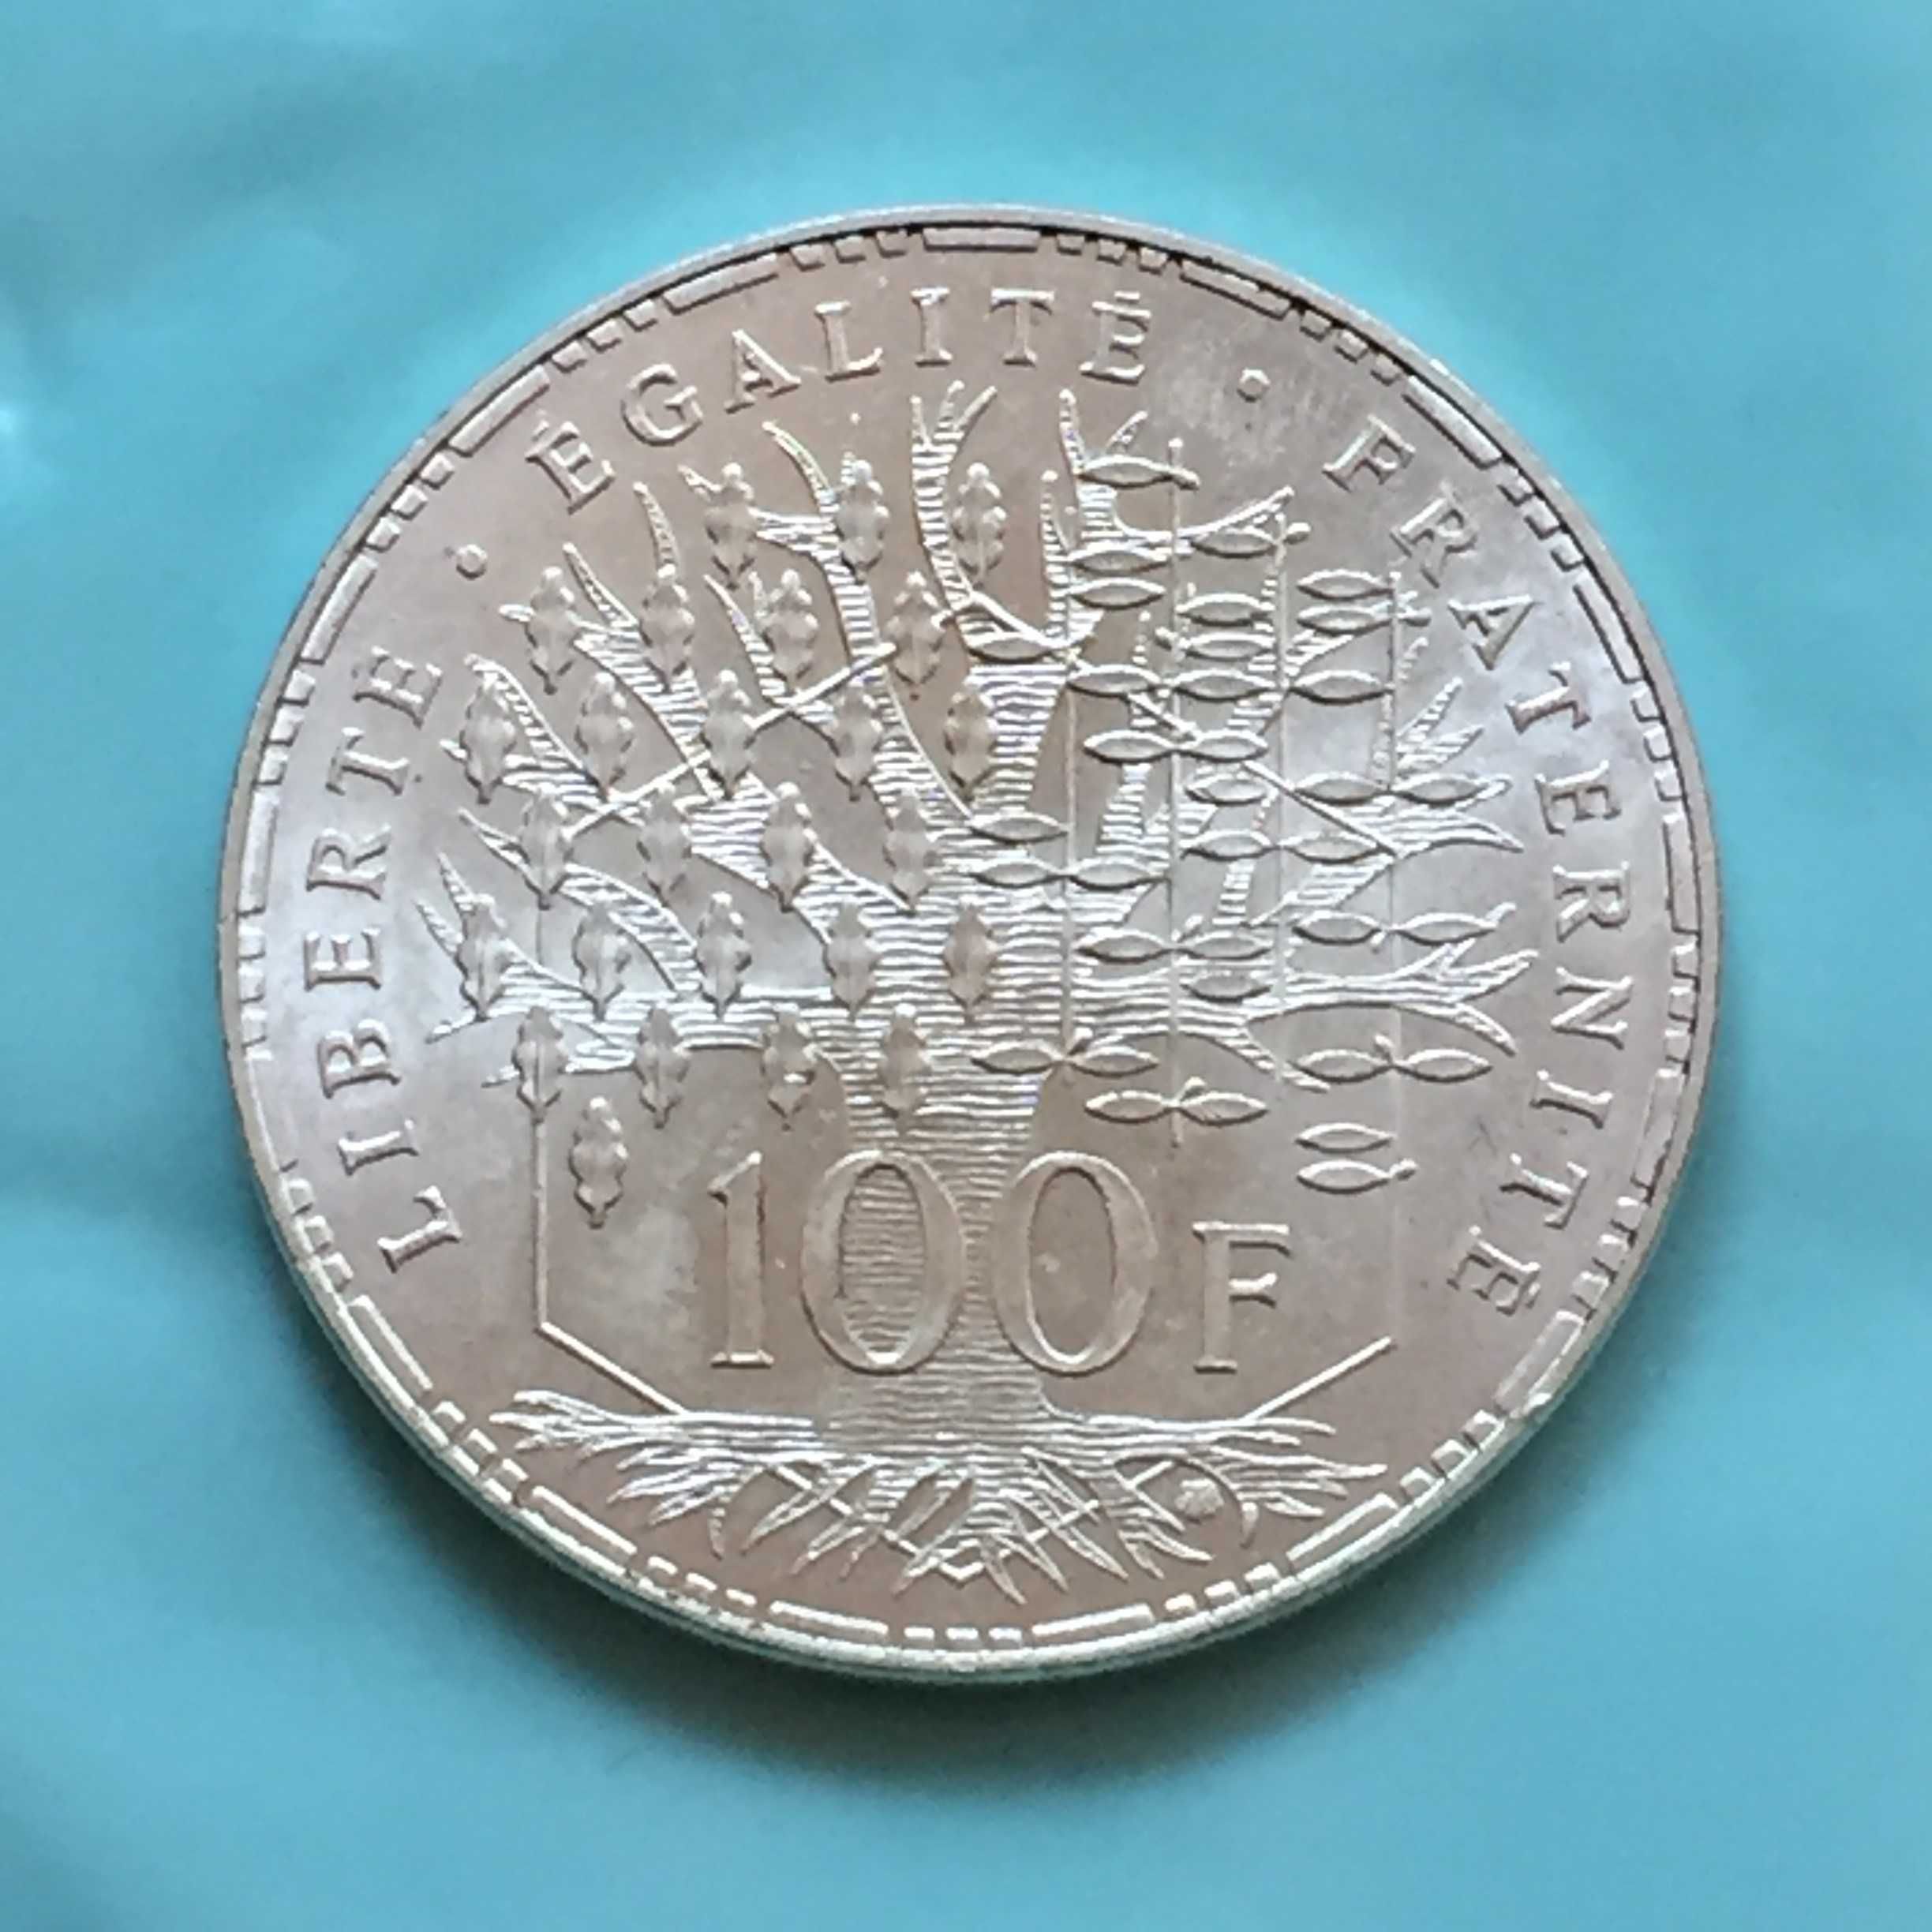 França - moeda 100 Francos 1983 - Pantheon - prata